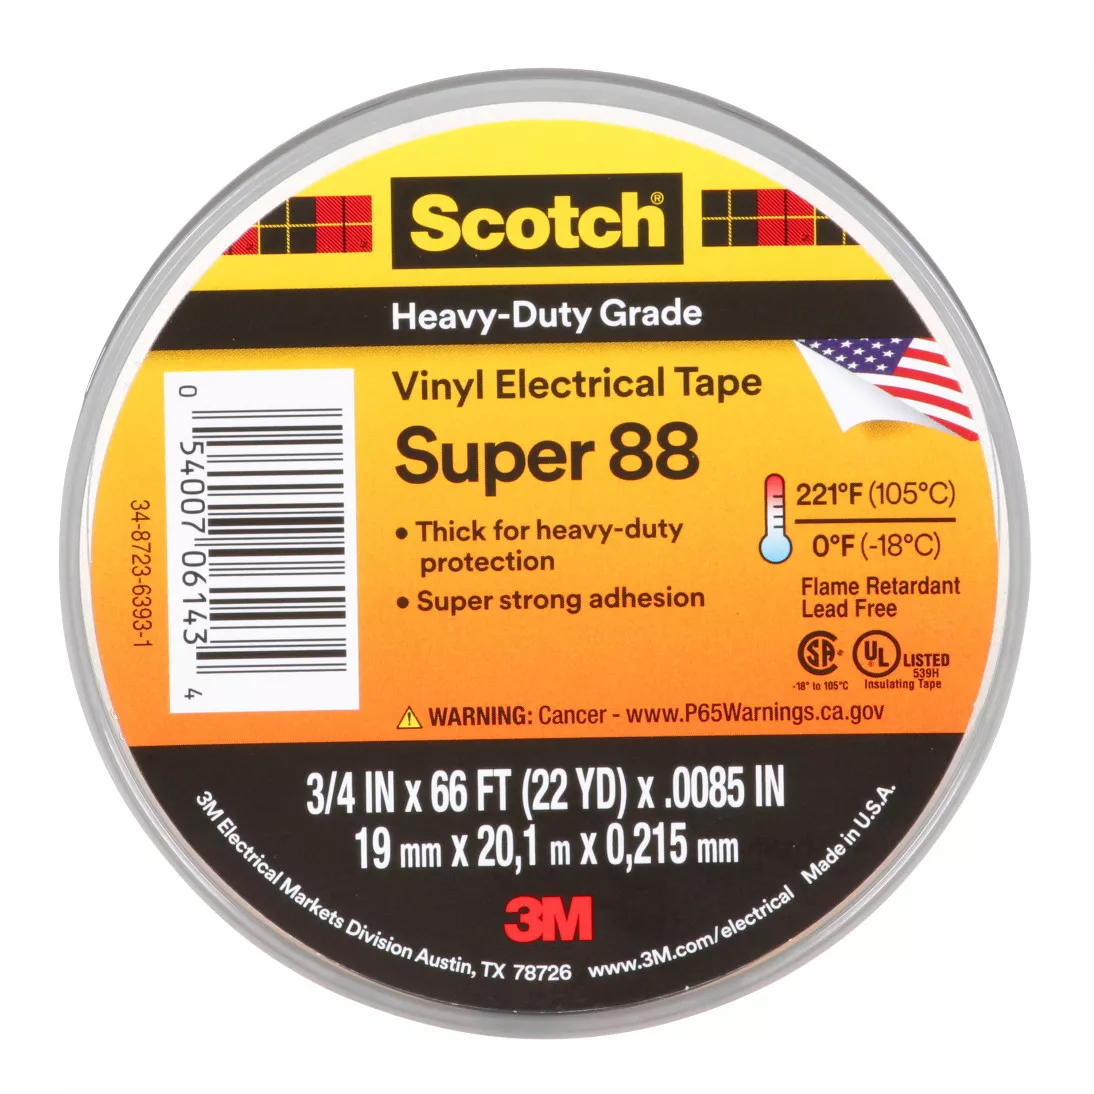 Scotch® Vinyl Electrical Tape Super 88, 3/4 in x 66 ft, Black, 10
rolls/carton, 100 rolls/Case